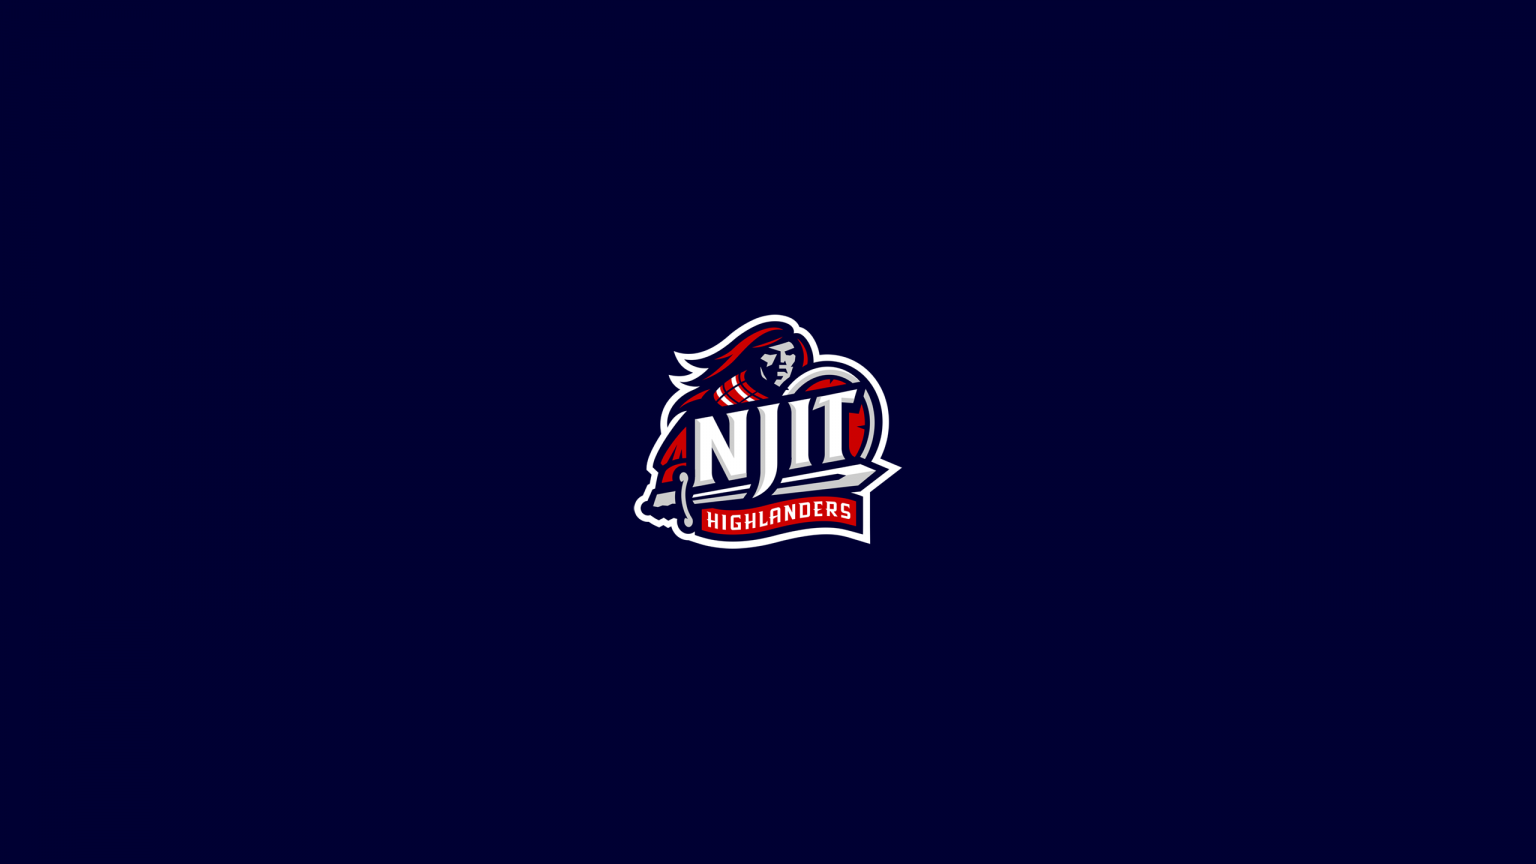 NJIT Highlanders Basketball - NCAAB - Square Bettor